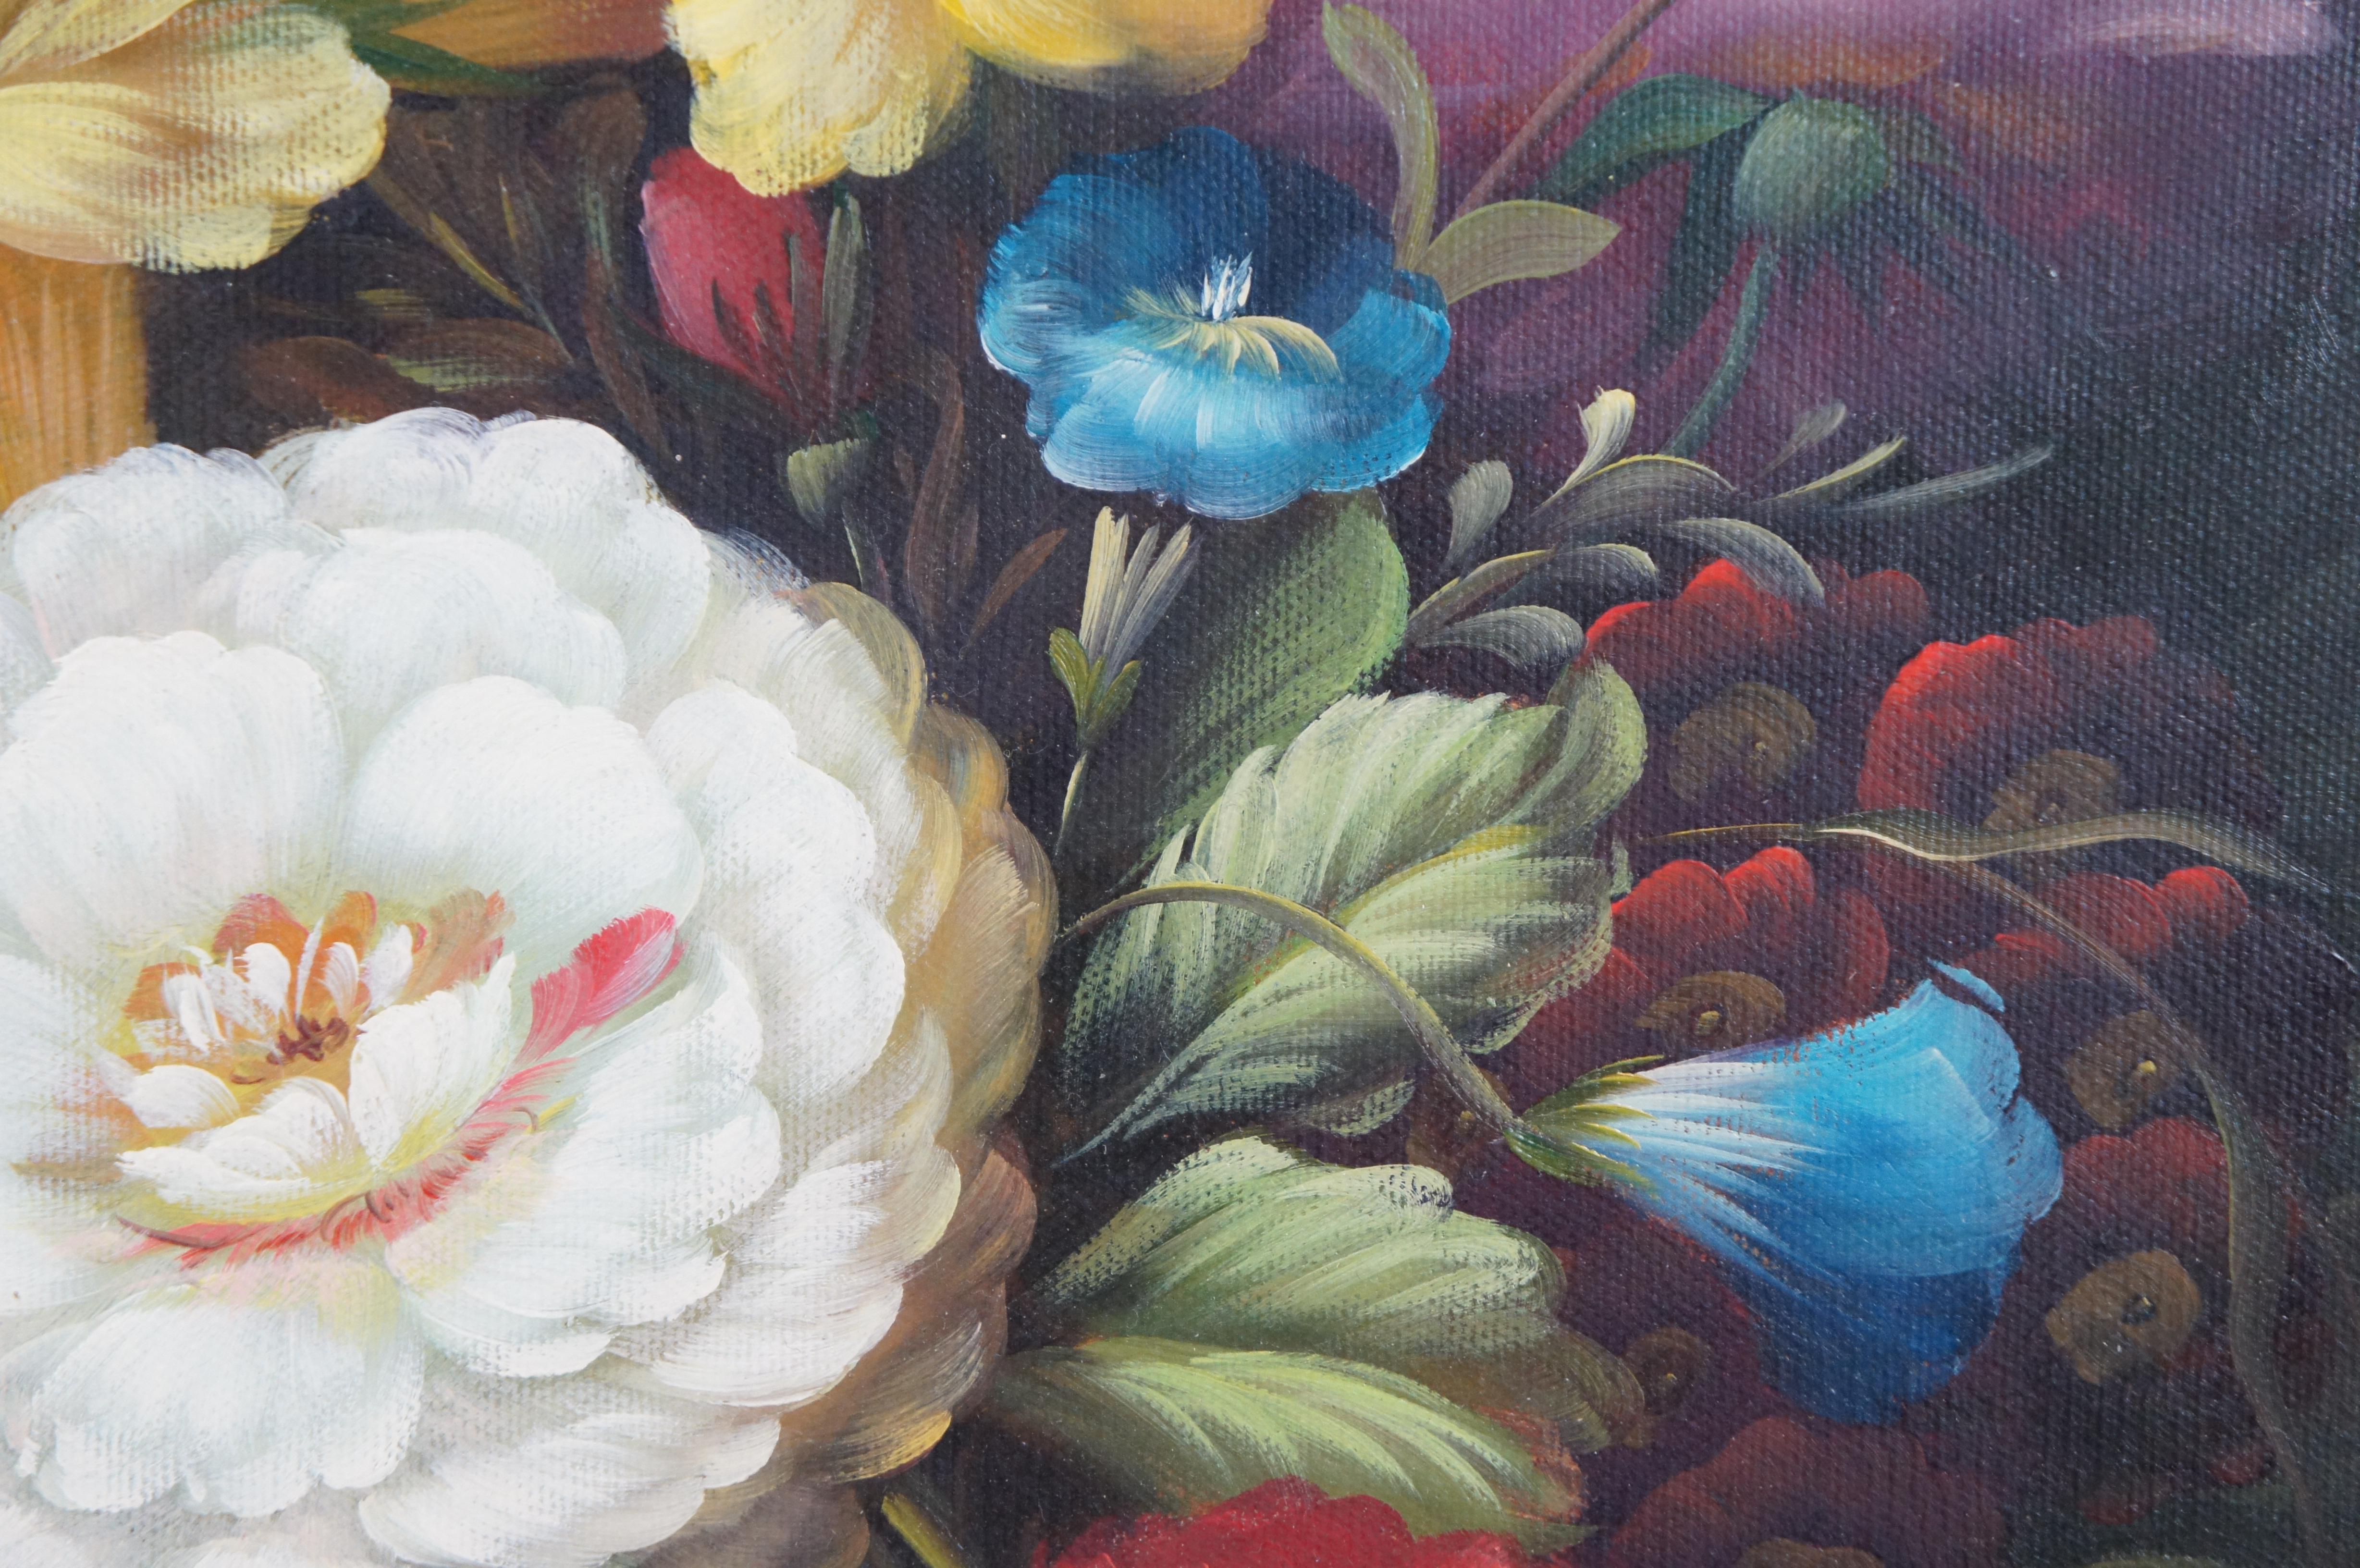 Vintage M Aaron Floral Botanical Bouquet Still Life Oil Painting on Canvas 31